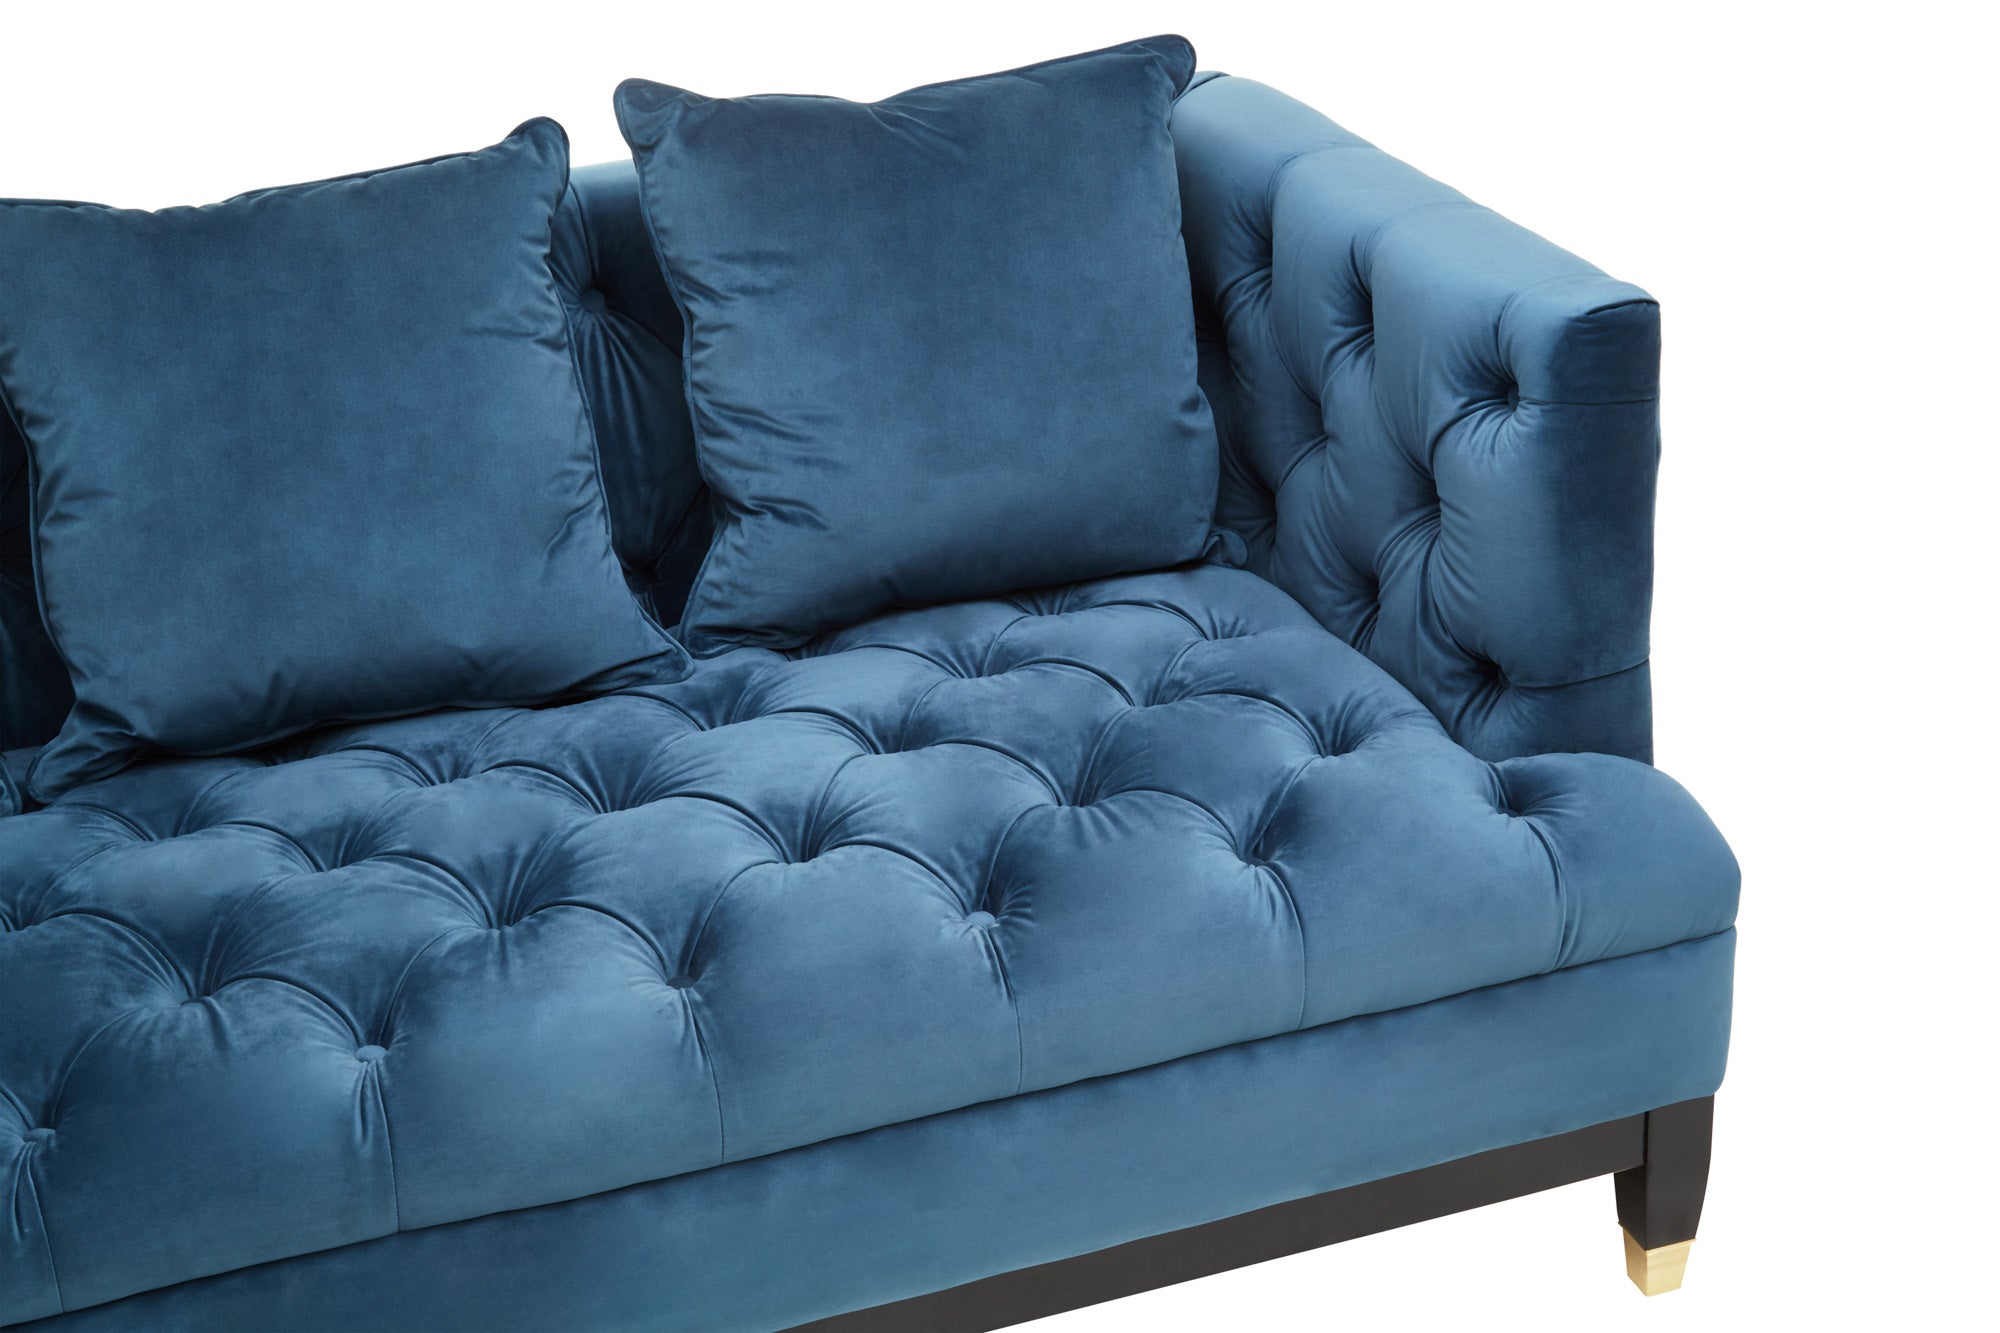 3 Seat Sofa Supremacy Fabric Navy